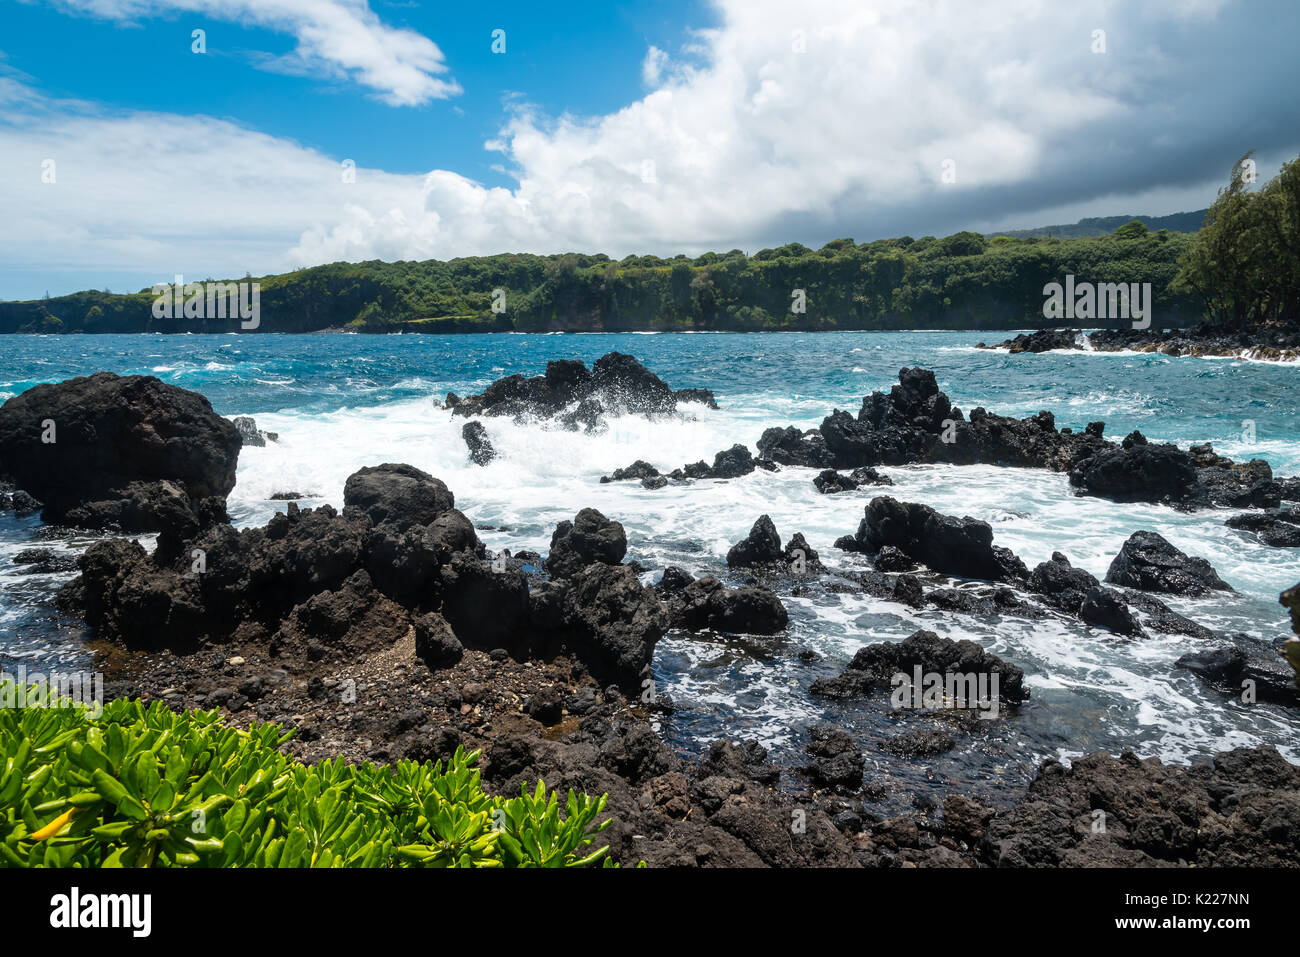 Surf hitting volcanic rocks on Maui, Hawaii Stock Photo